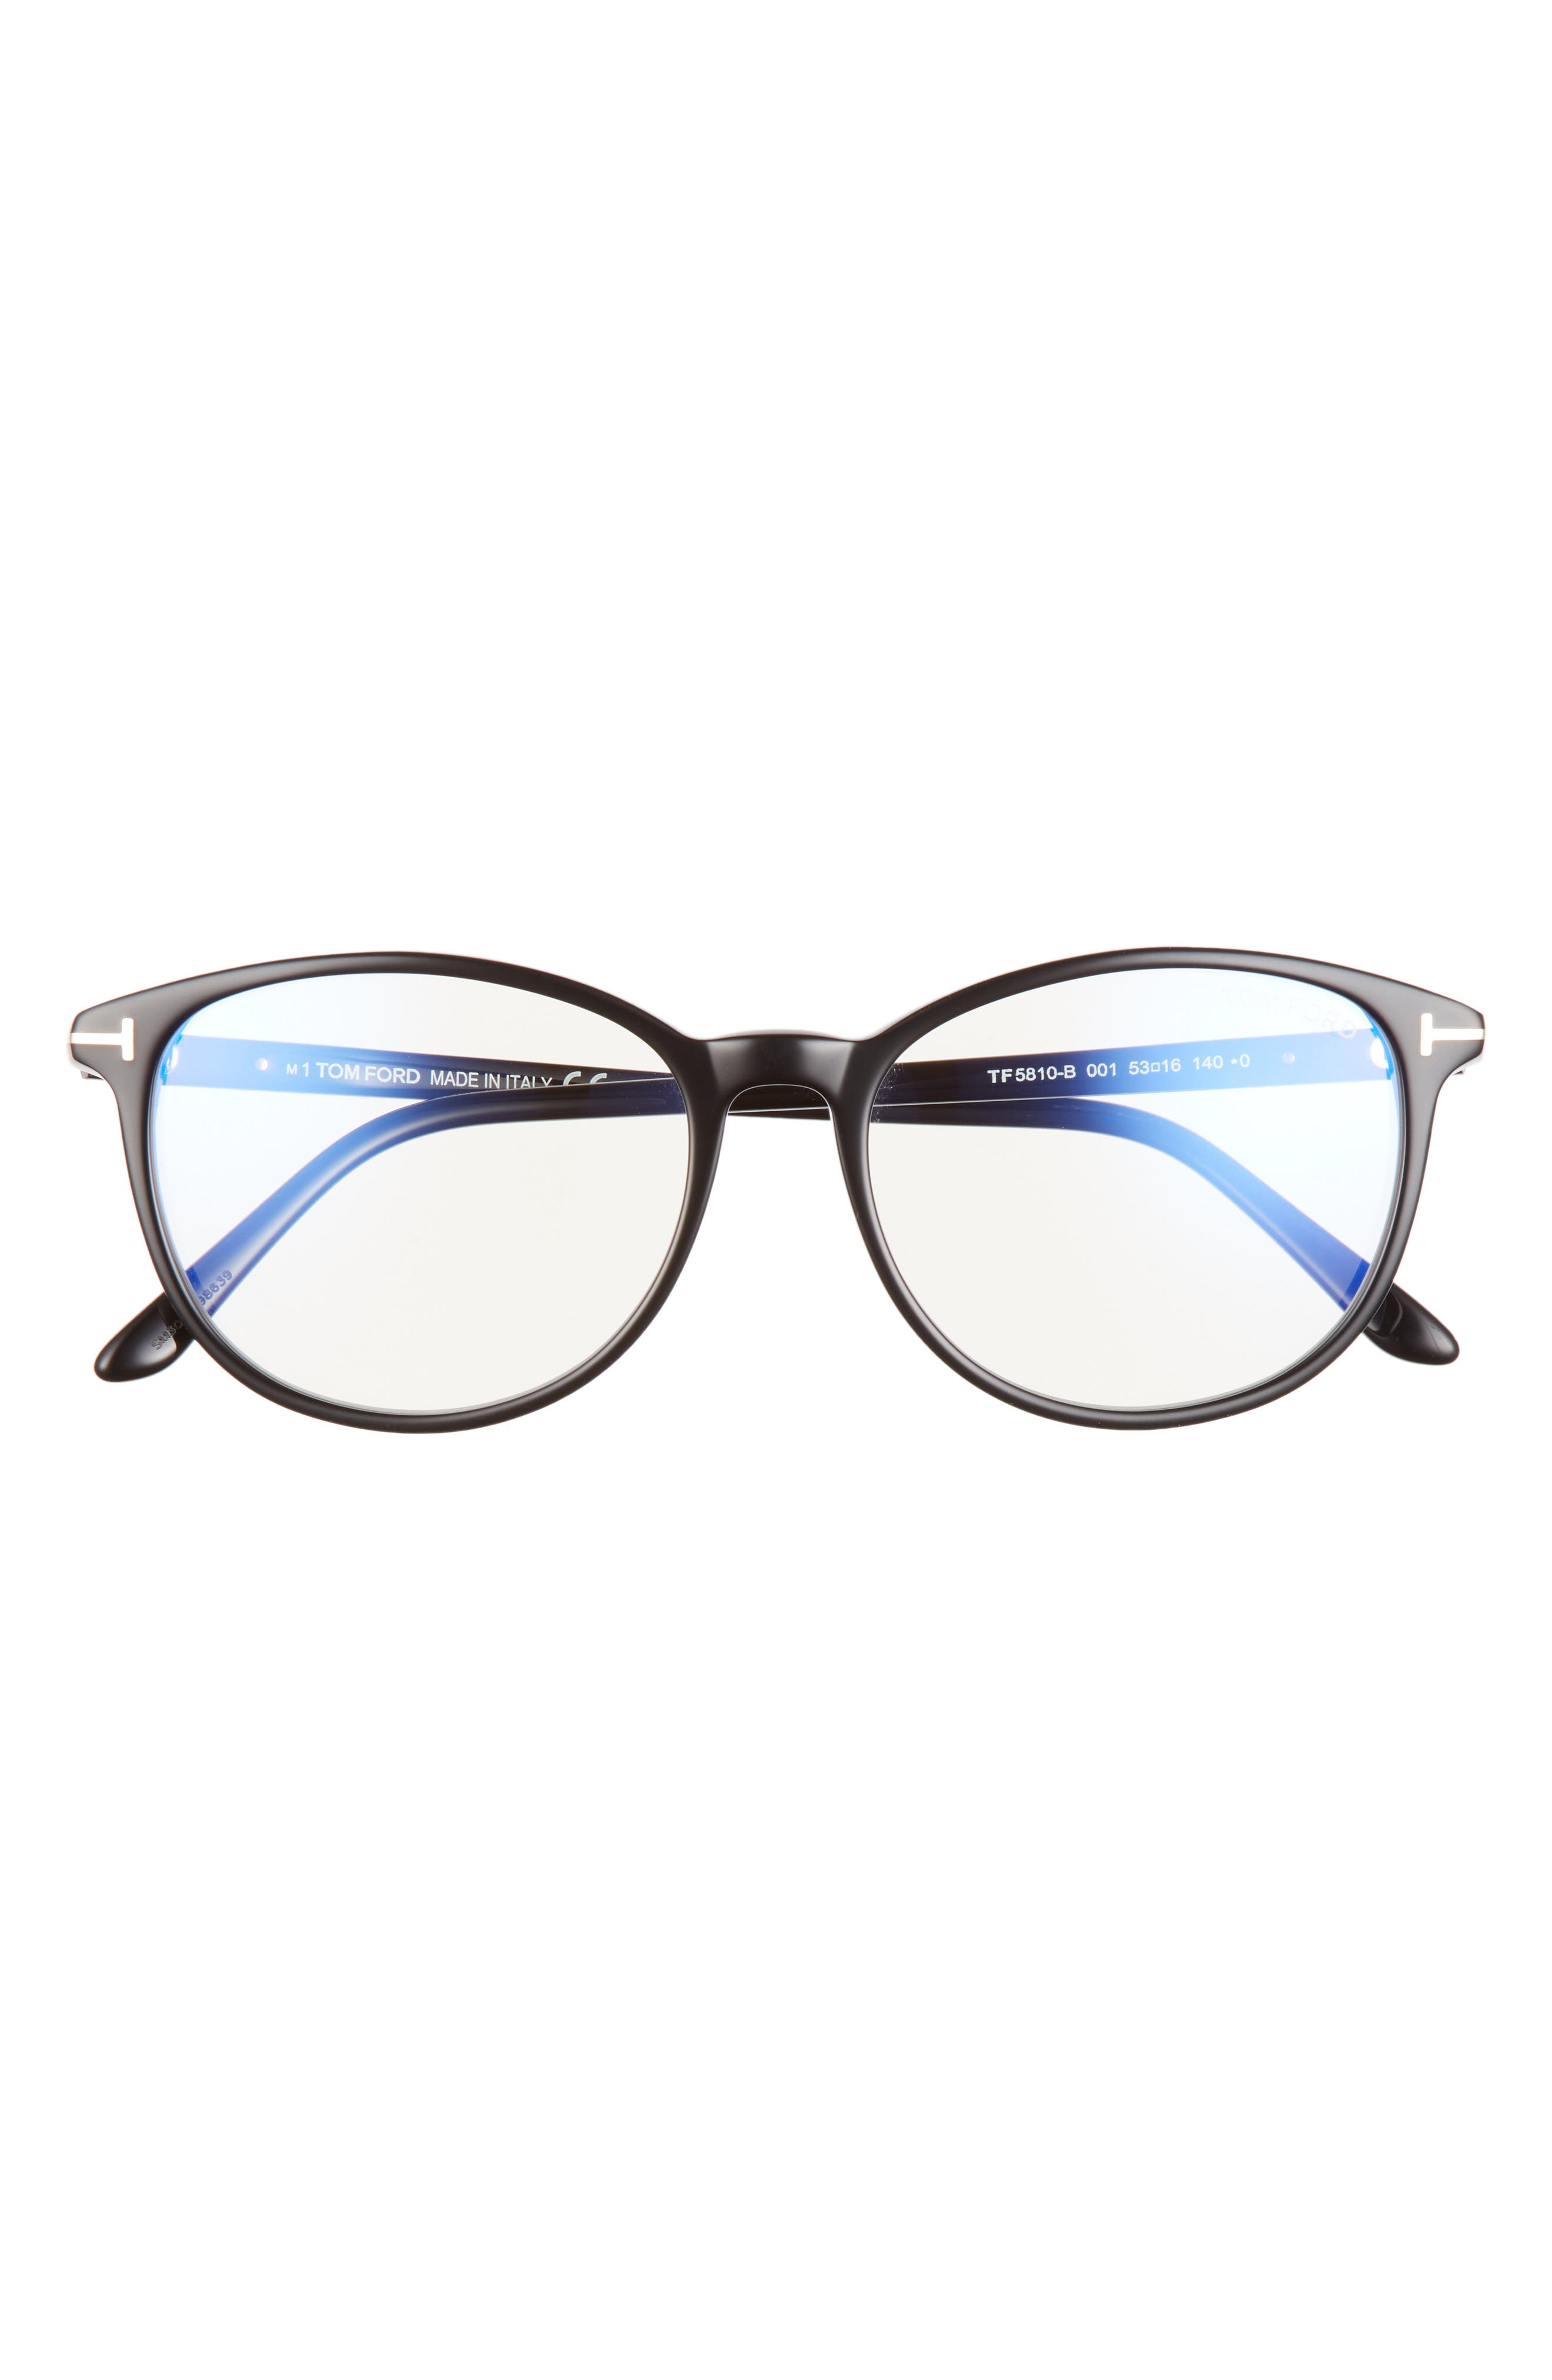 Tom Ford 53mm Cat Eye Glasses in Shiny Black